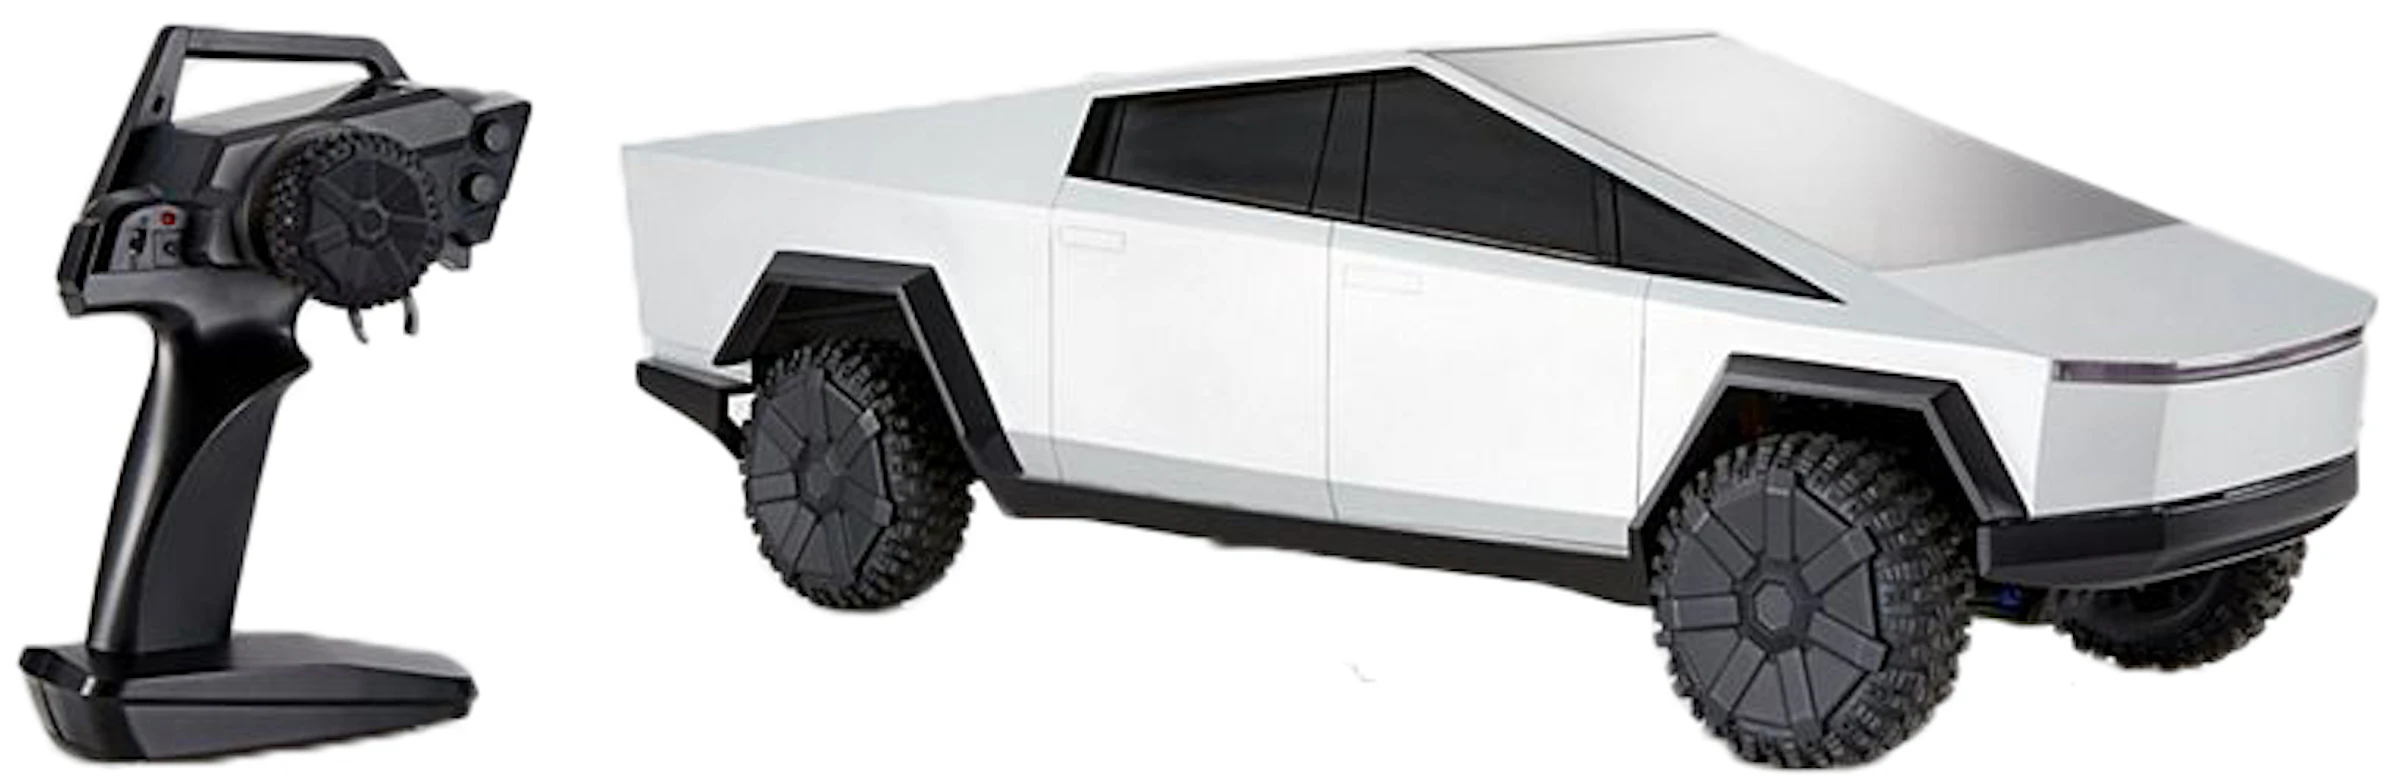 Executie Traditioneel Terzijde Hot Wheels x Tesla Cybertruck 1:10 Scale RC Car (2020 Version) - US